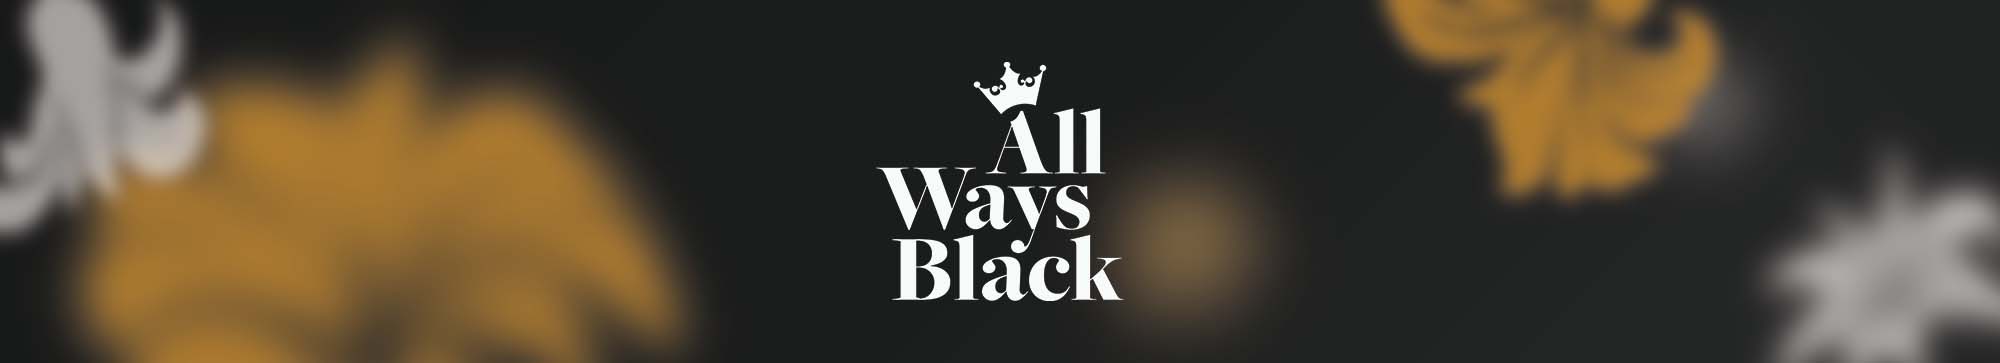 All Ways Black